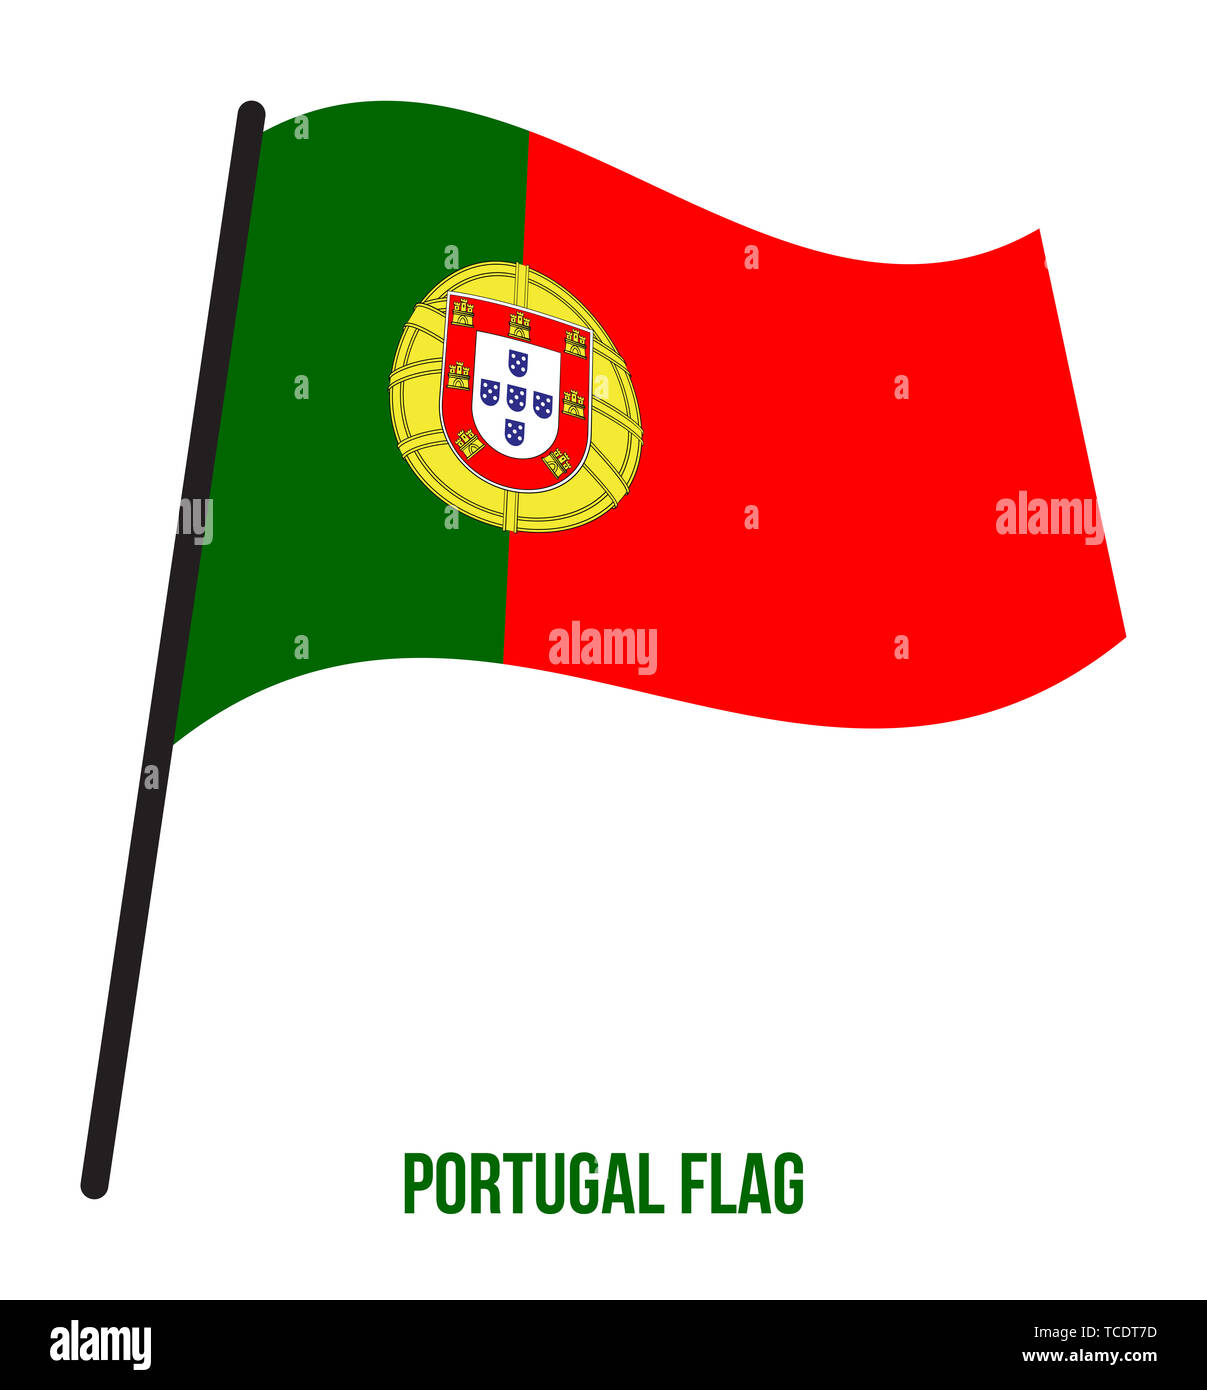 Portugal Flag Waving Vector Illustration on White Background. Portugal National Flag. Stock Photo